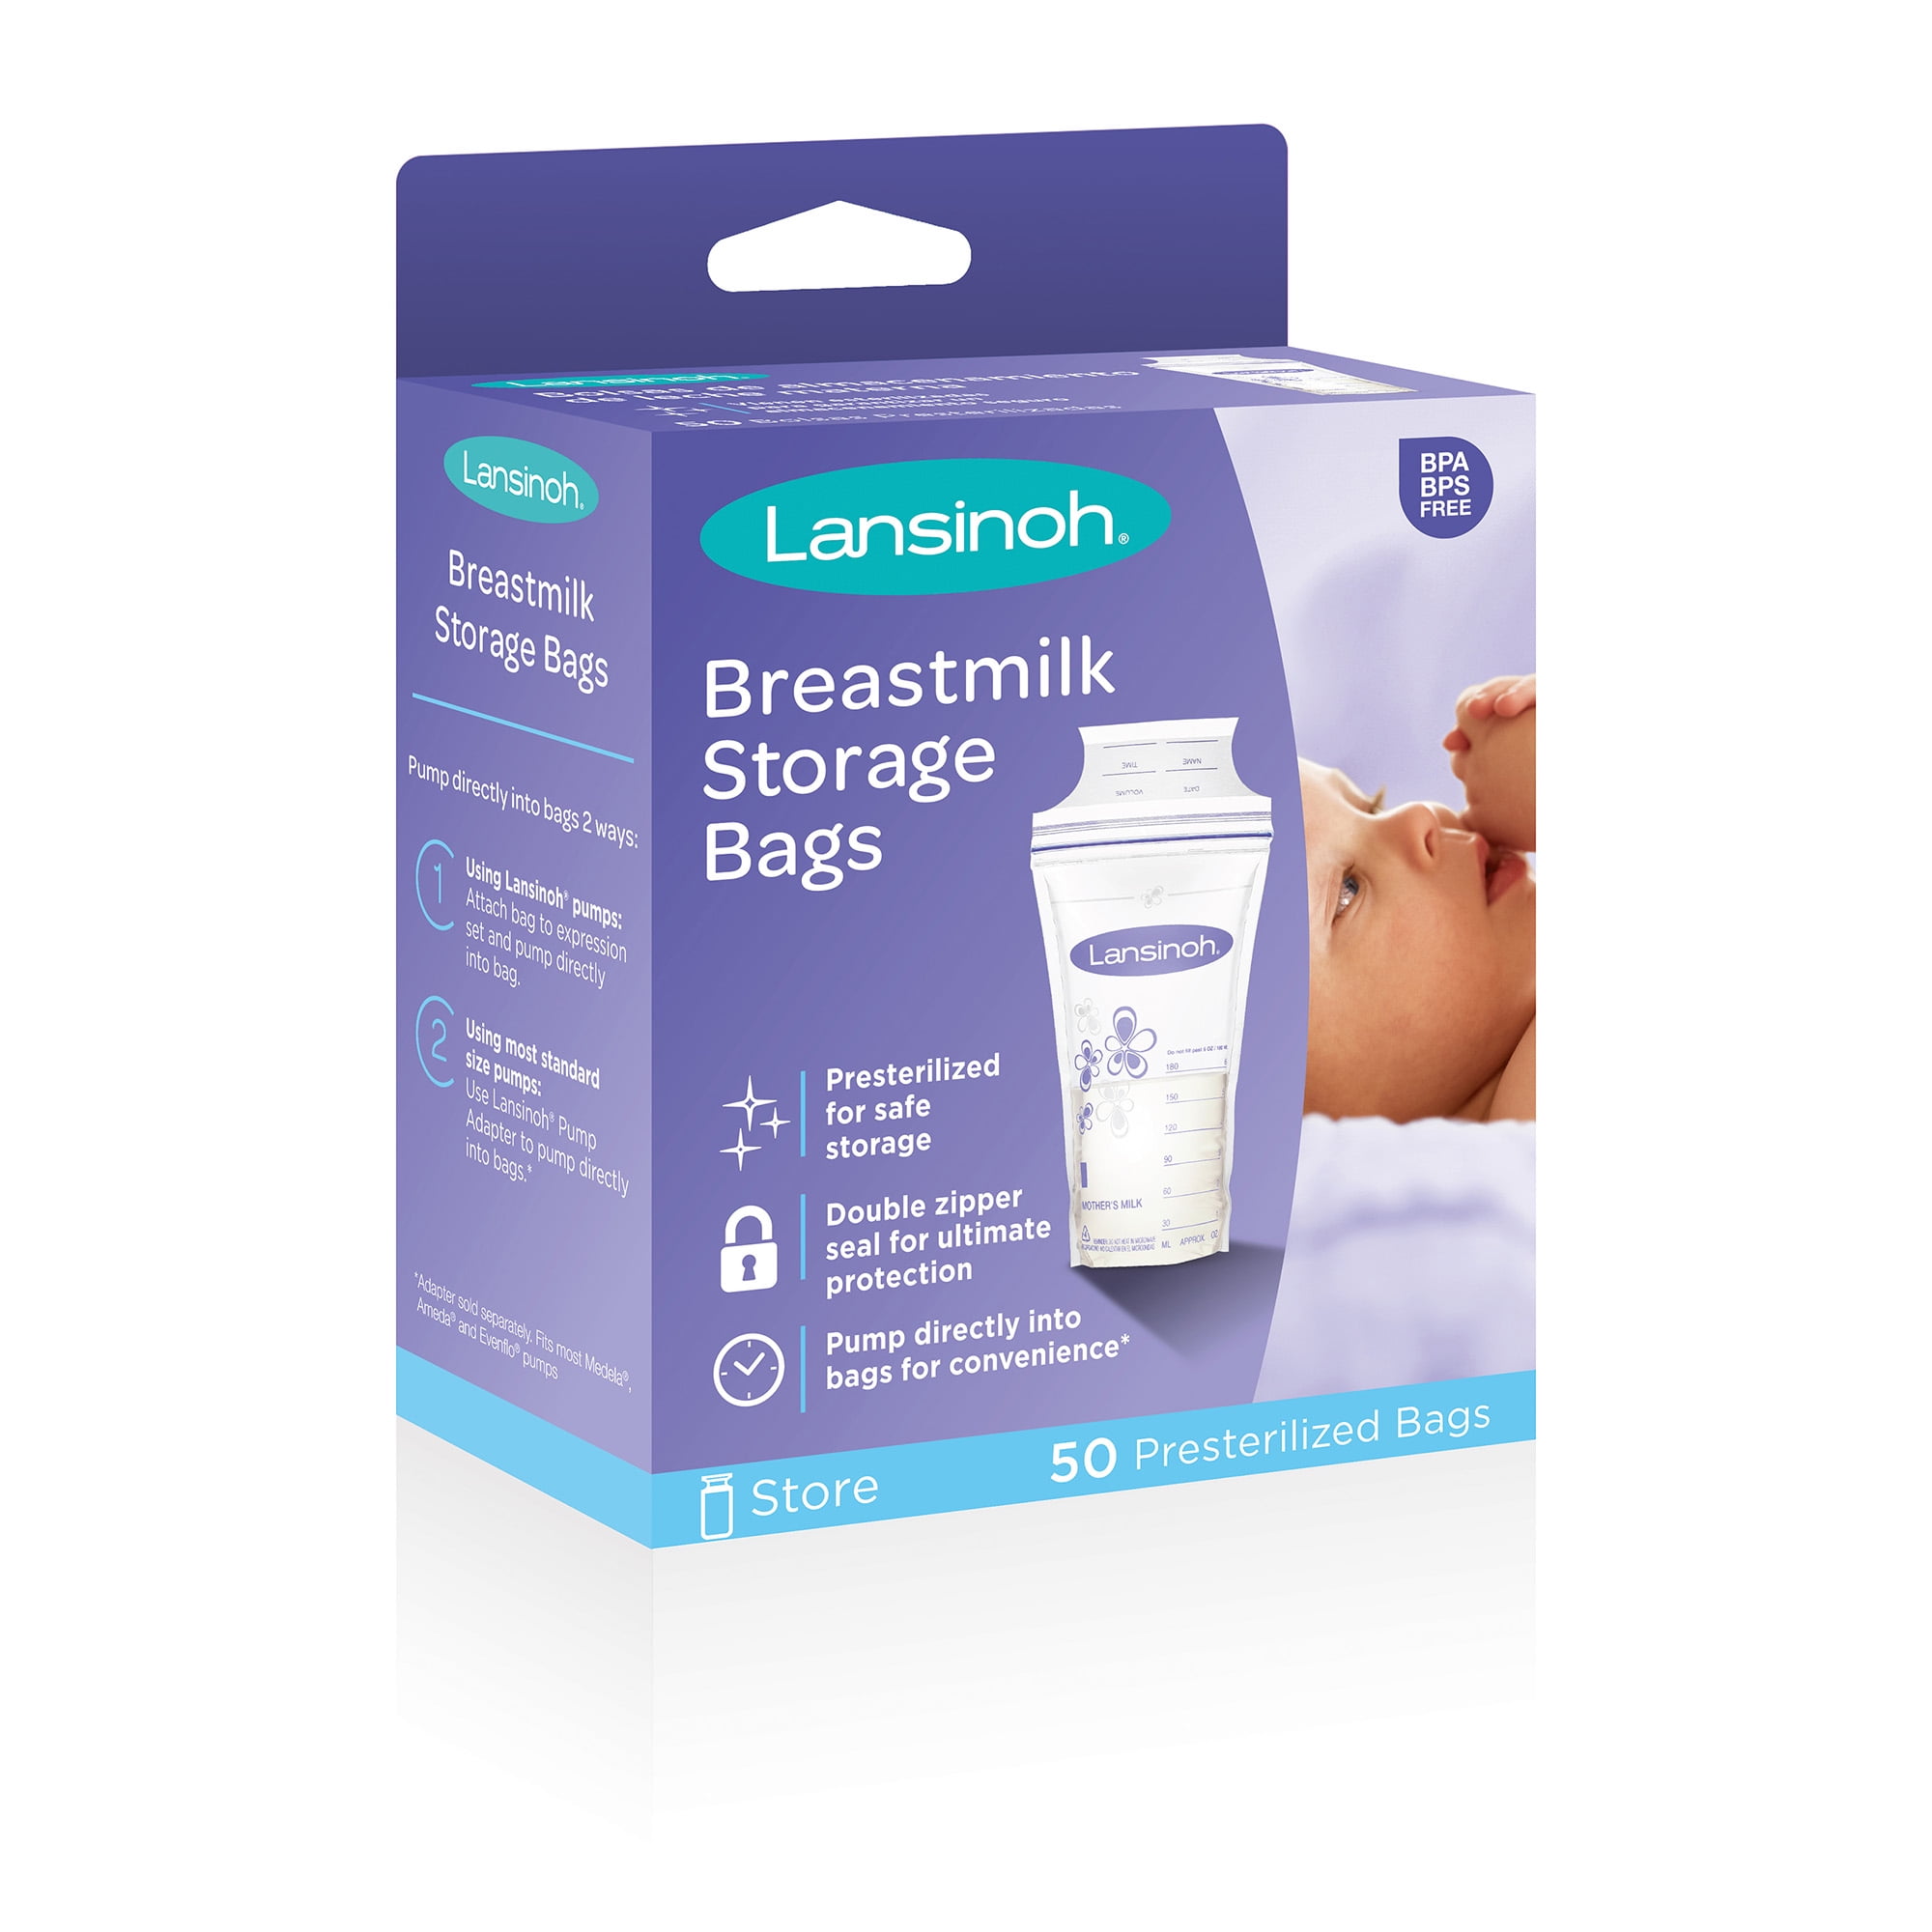 Lansinoh Breastmilk Storage Bags and Nursing Pads-Lot of 10 packages 